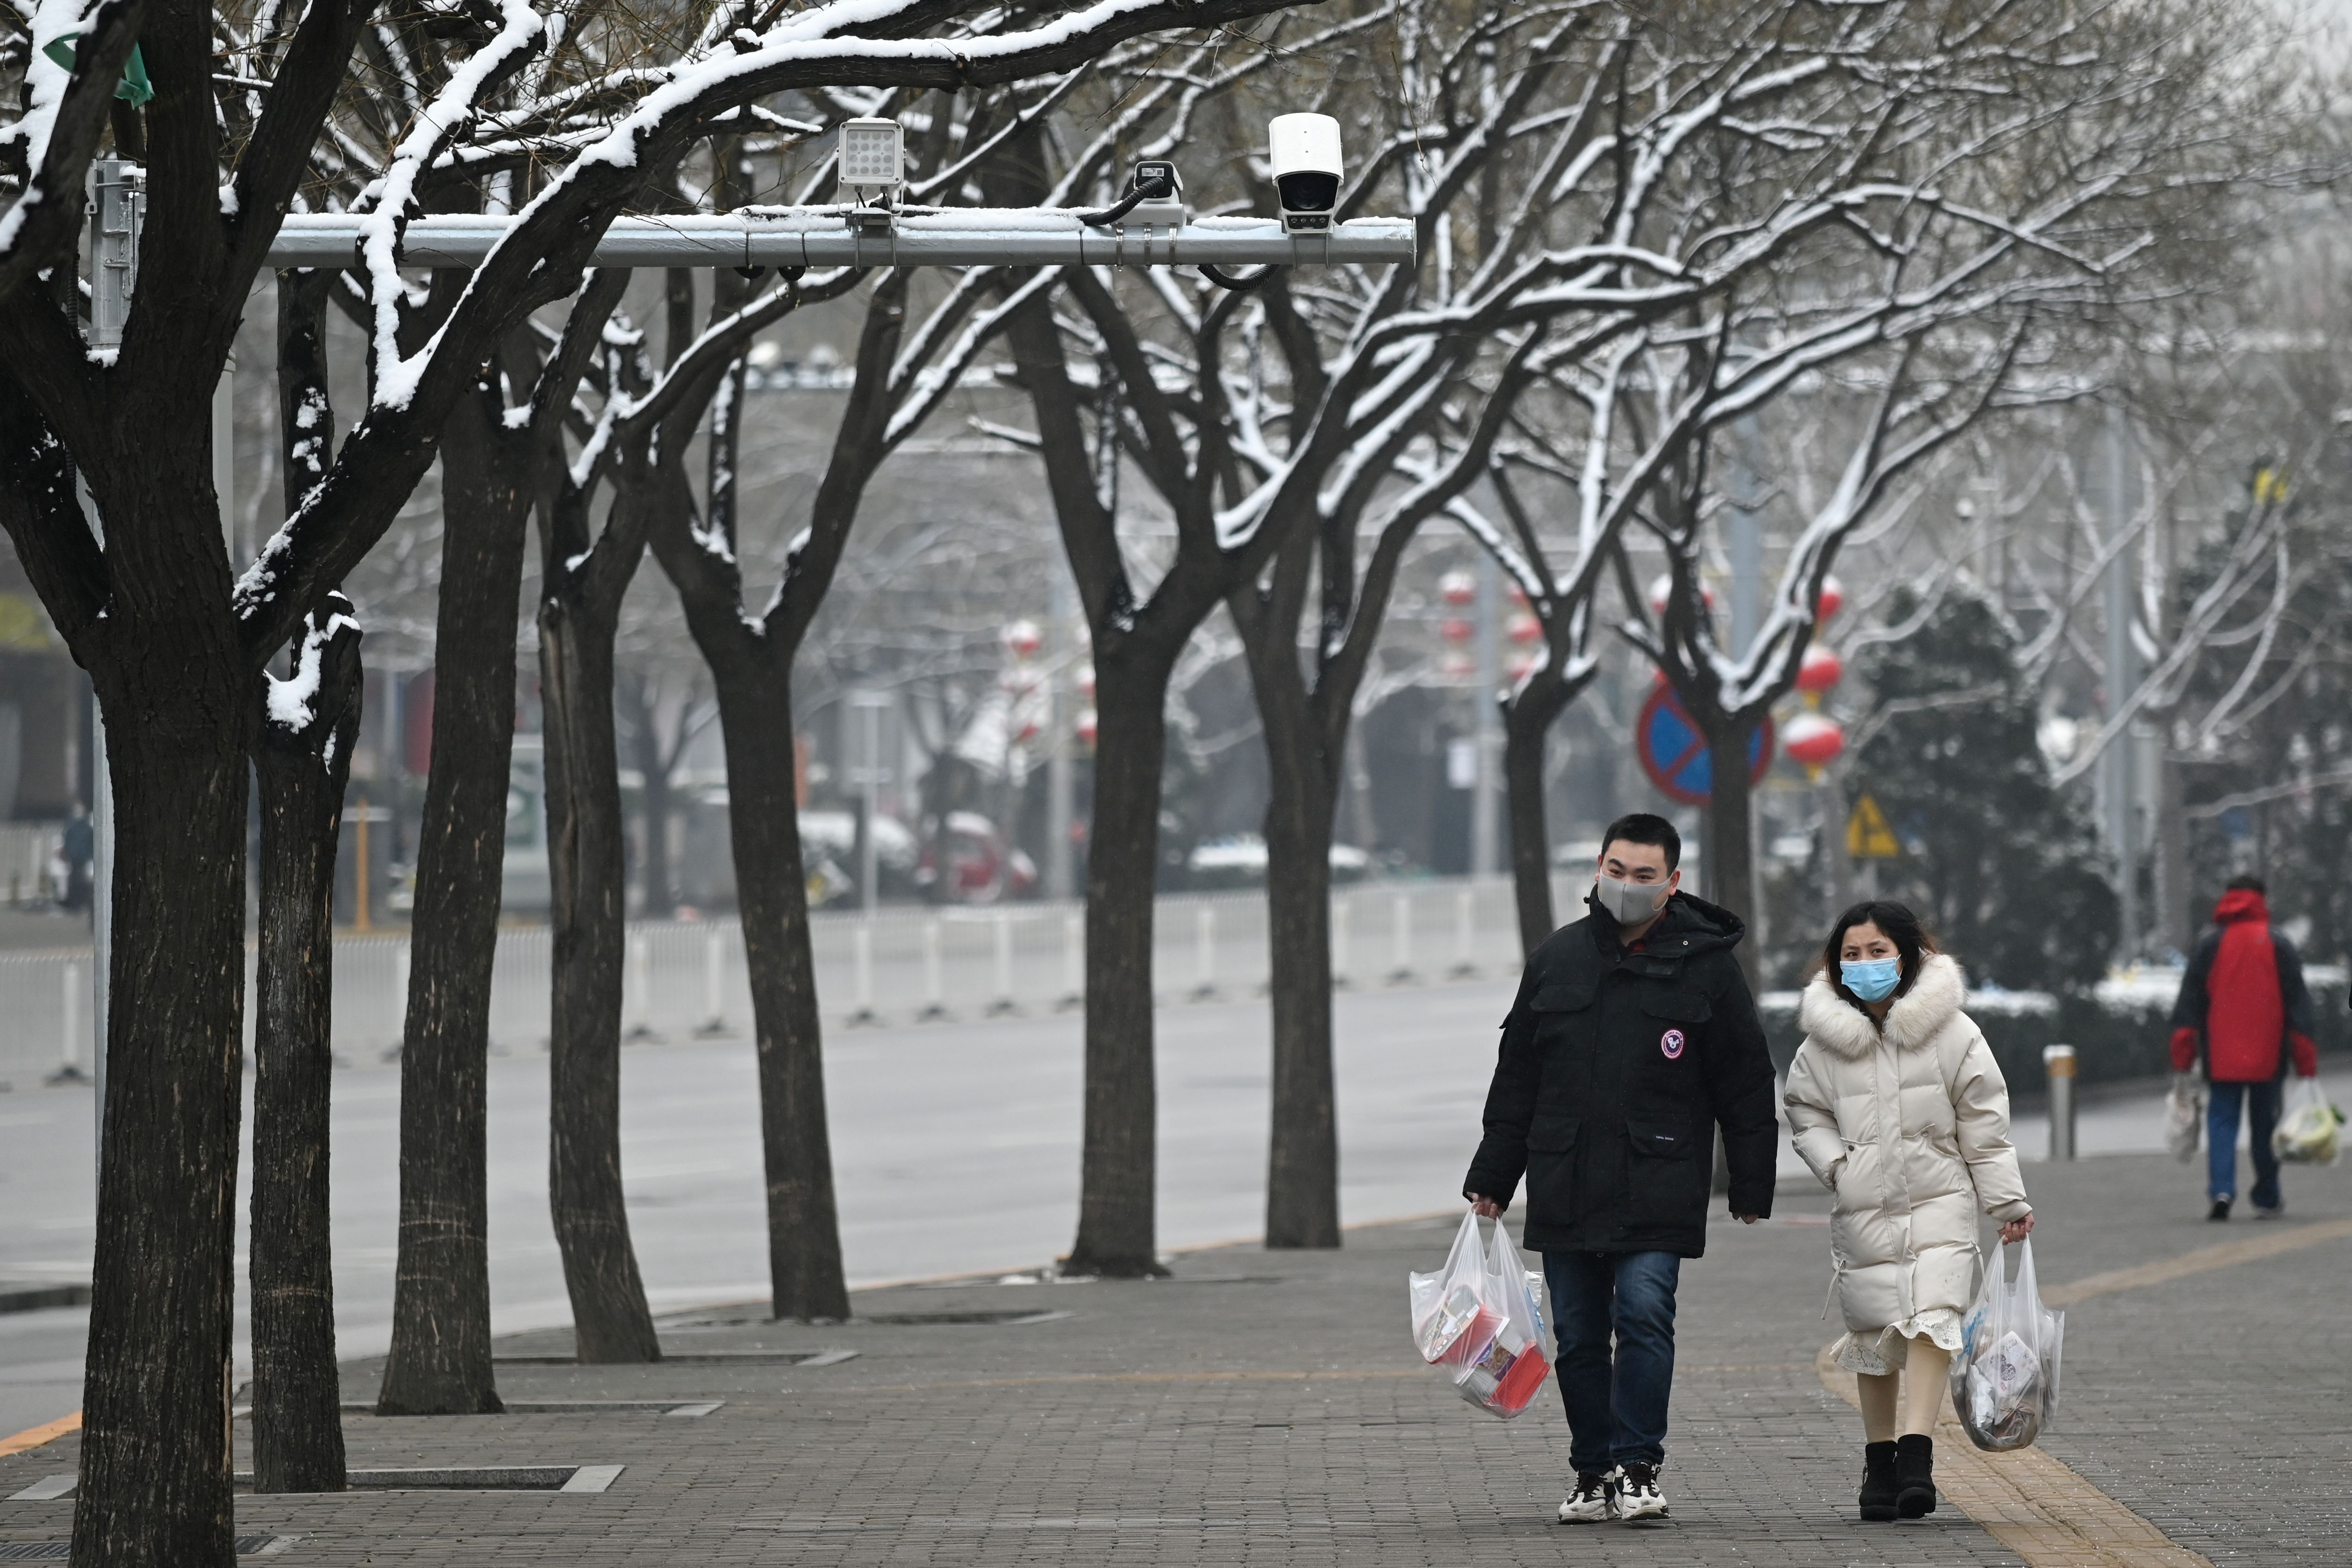 Pedestrians wearing masks walk along a road in Beijing on Sunday.